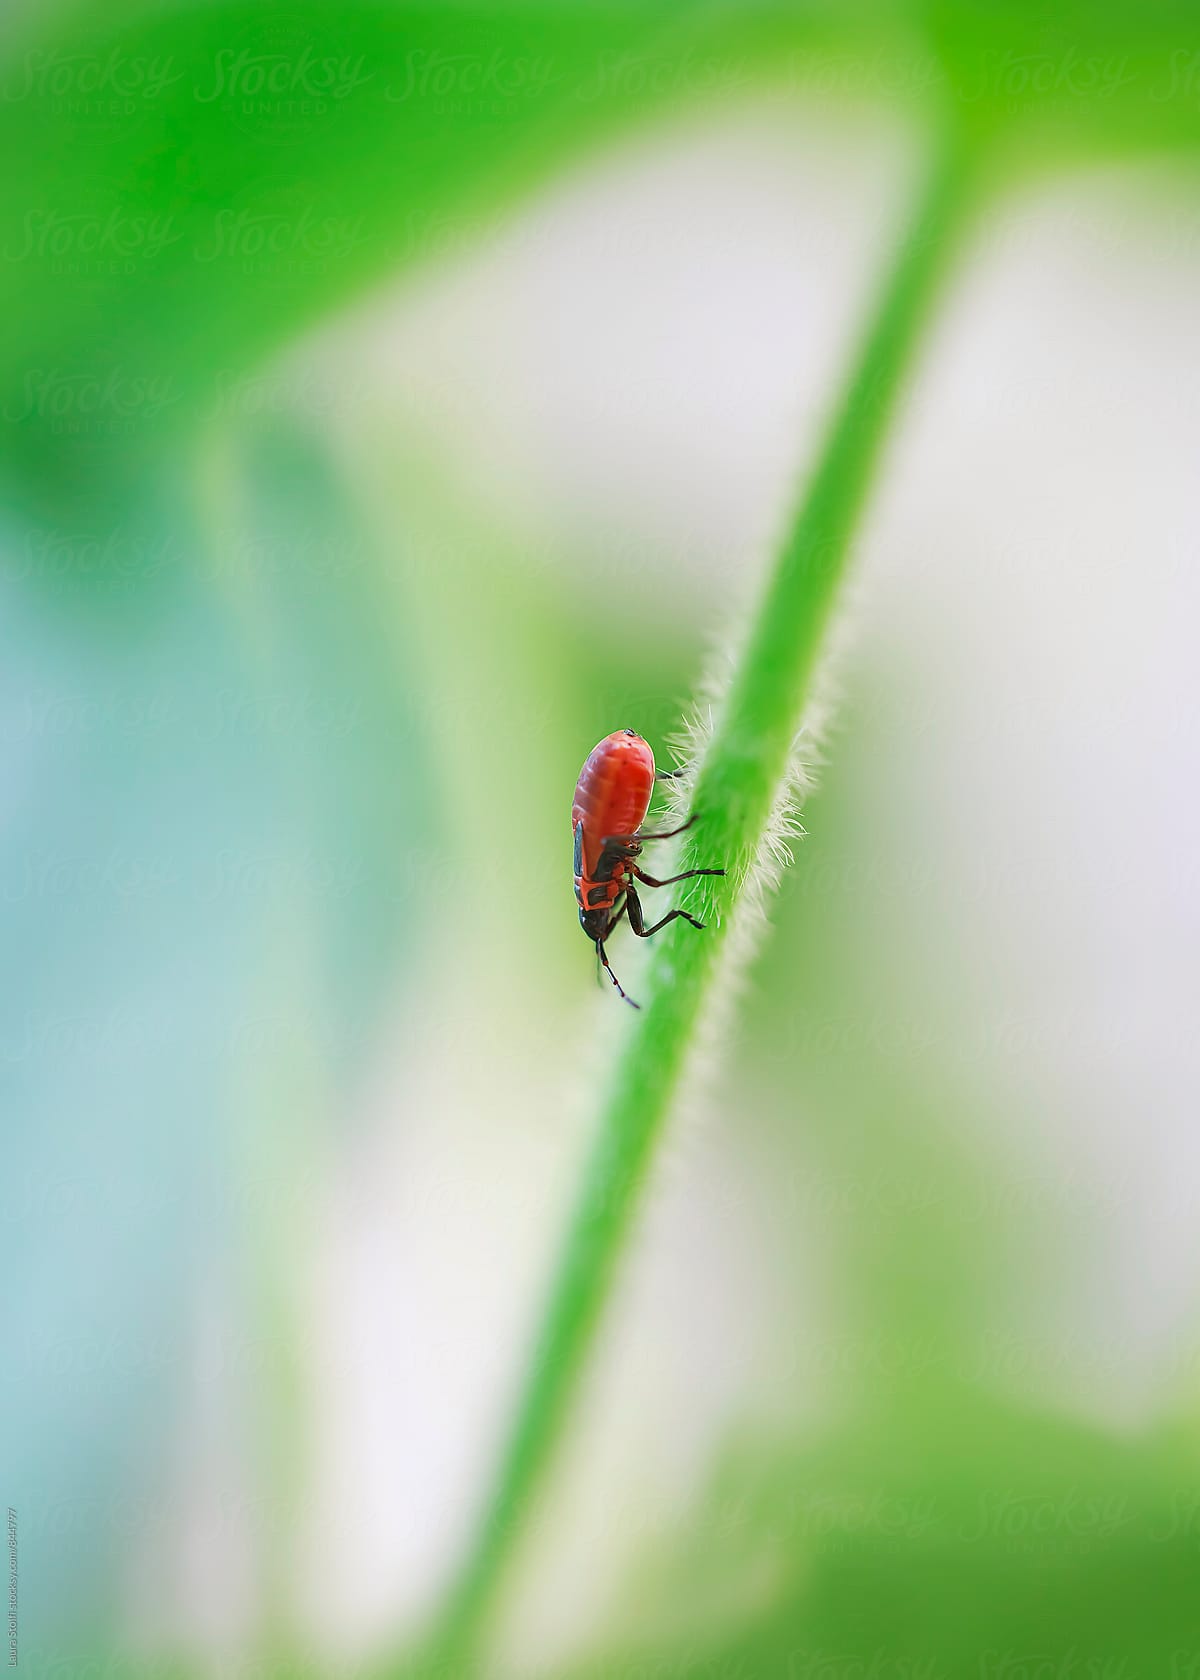 Firebug-nymph walking on stalk, macro catch